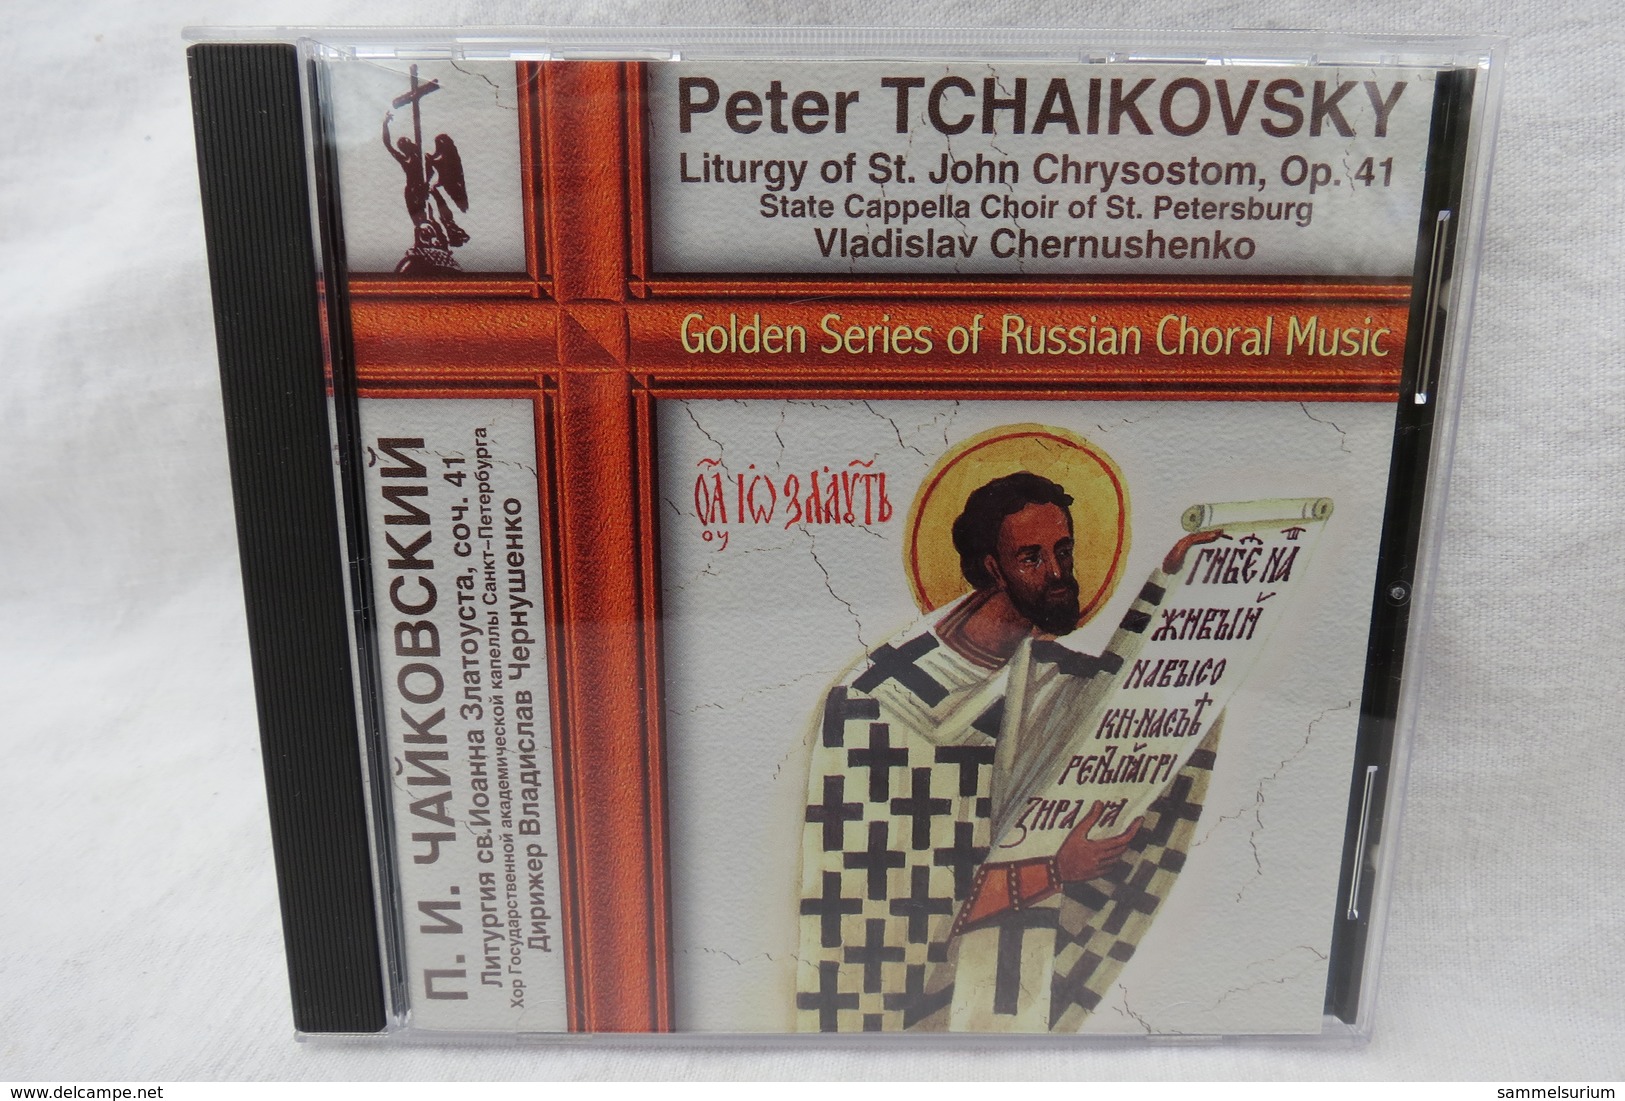 CD "Peter Tchaikovsky" Liturgy Of St. John Chrysostom, Op. 41, Vladislav Chernushenko - Gospel & Religiöser Gesang